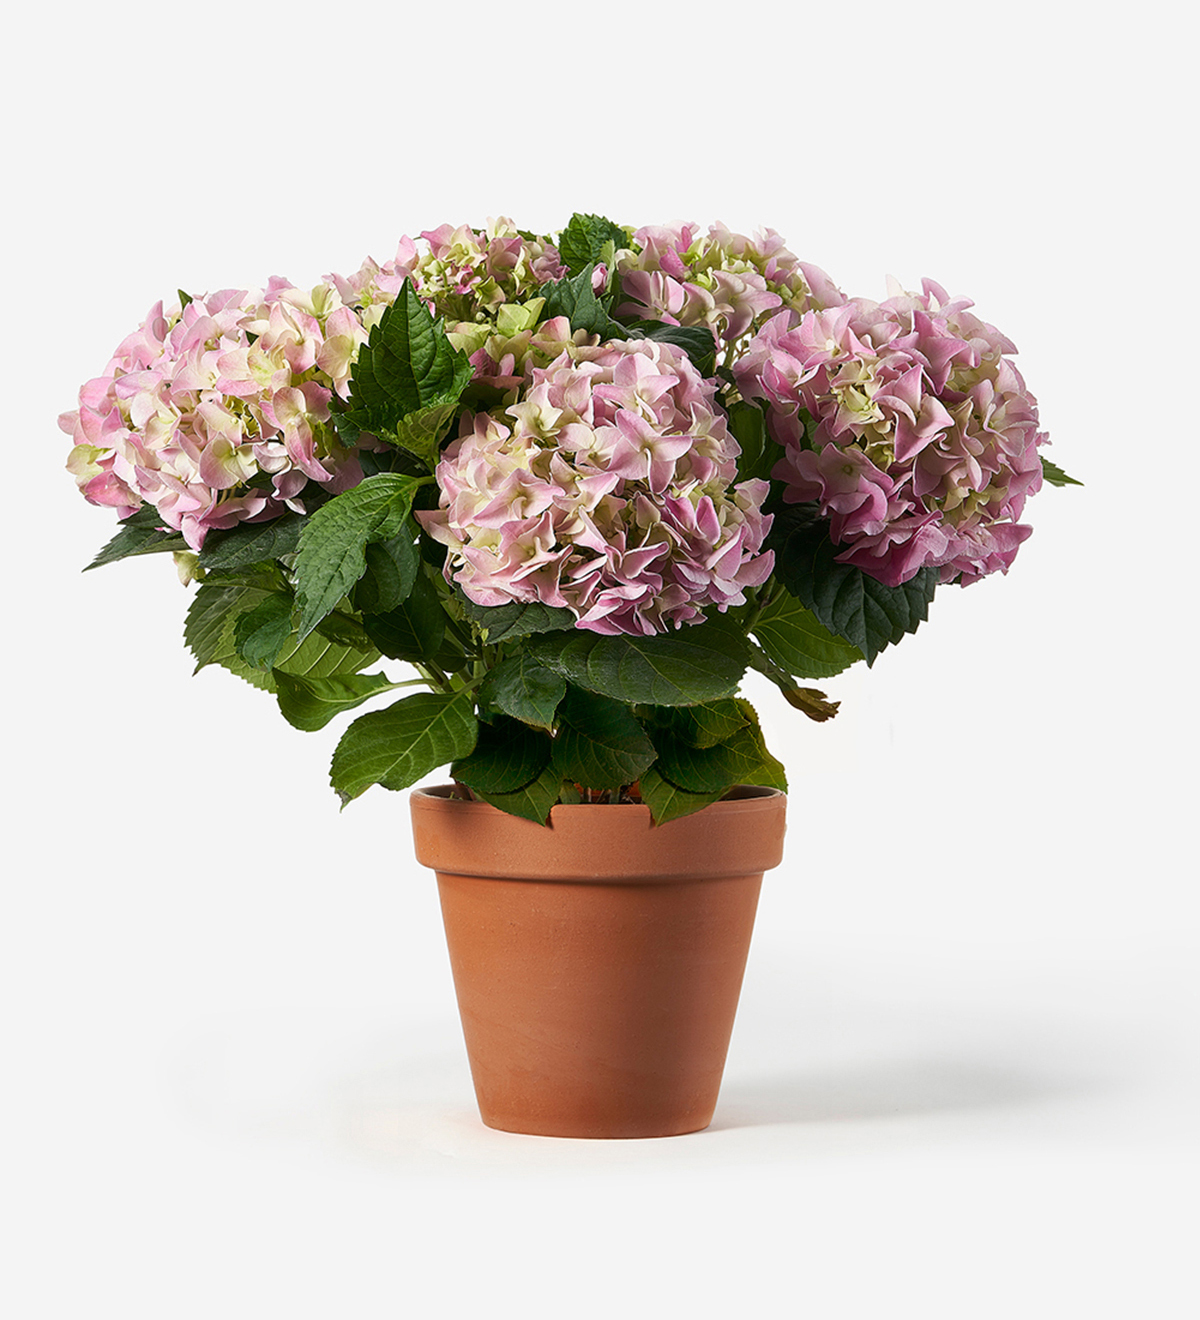 Image of Hydrangea brestenburg flower in terracotta pot